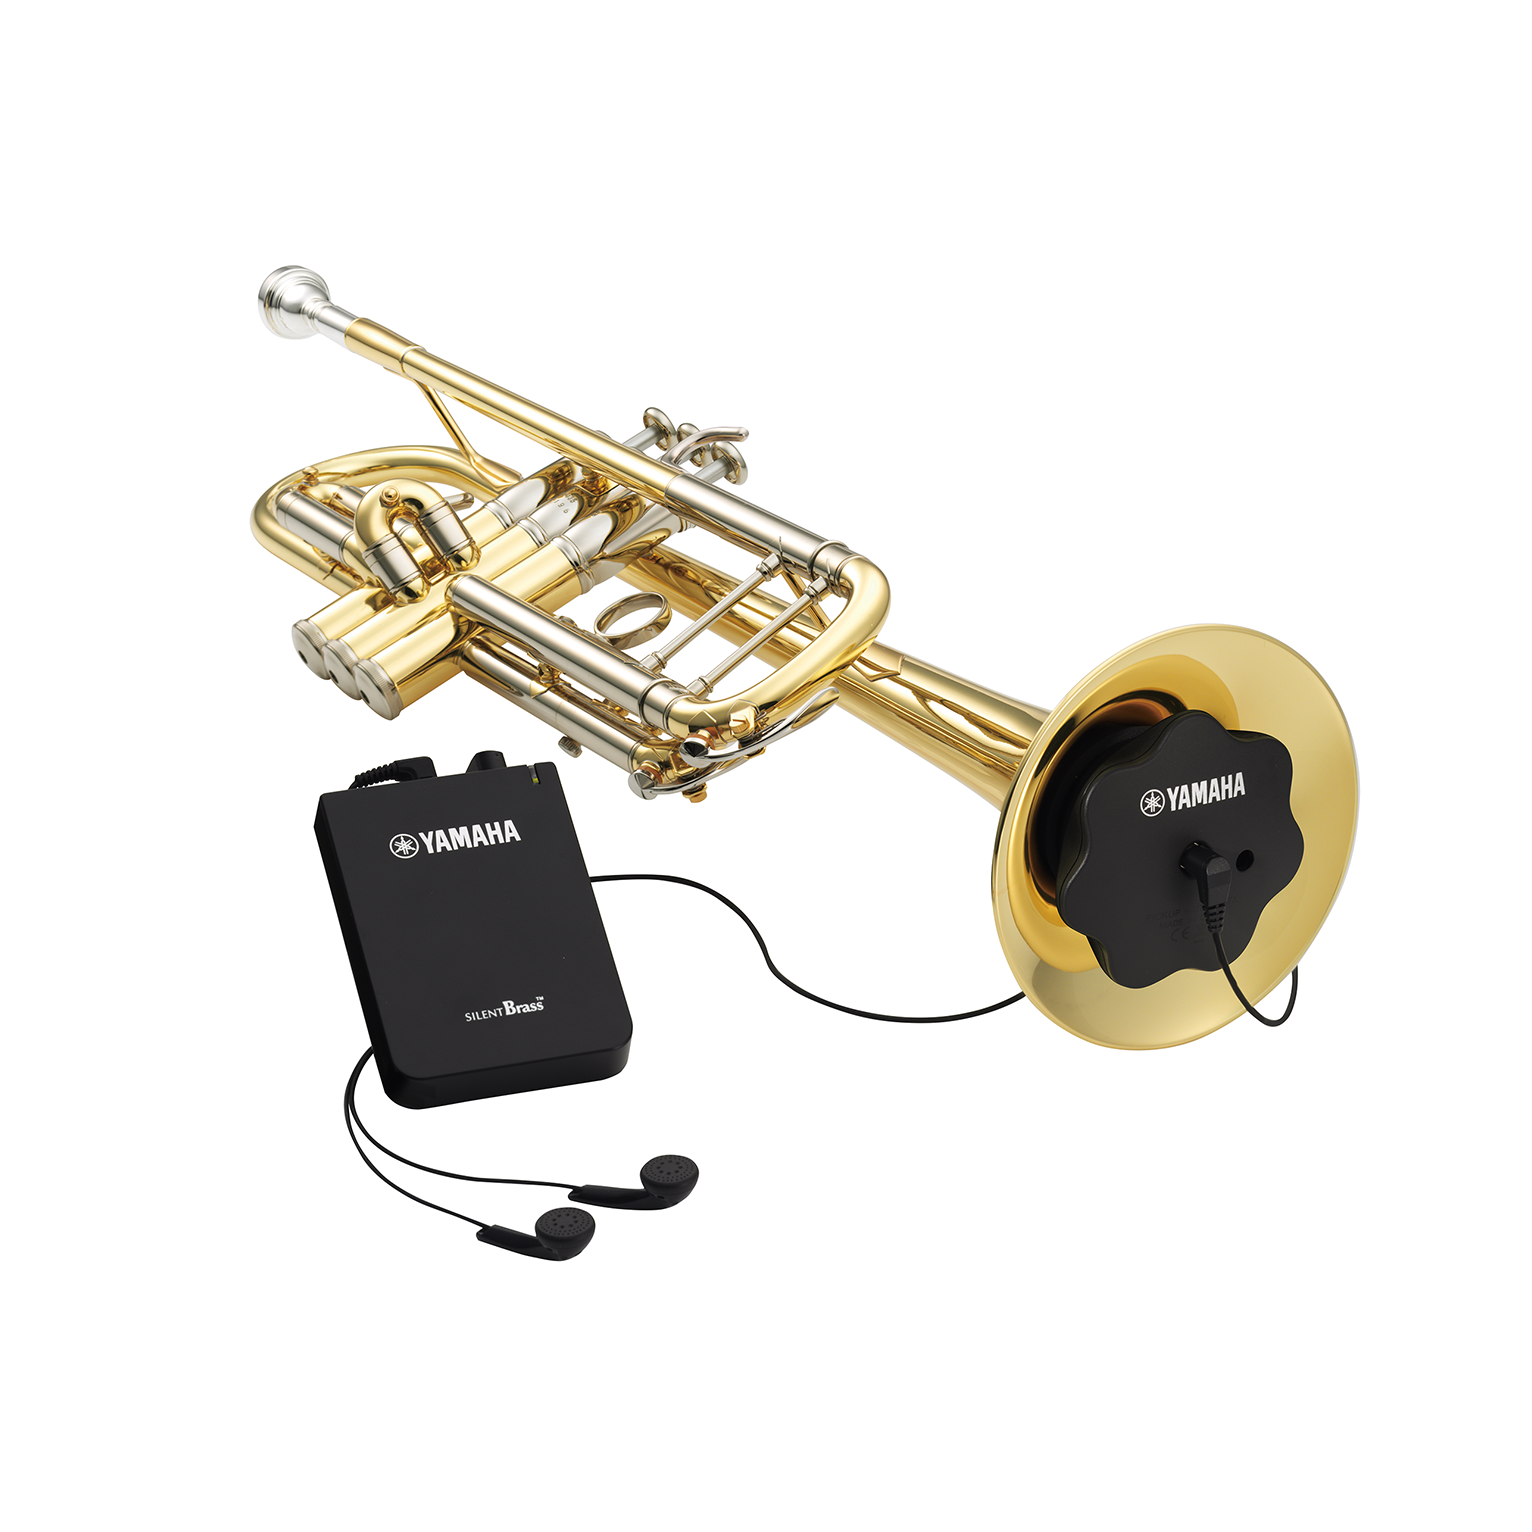 Yamaha SB7X Silent Brass for Trumpet